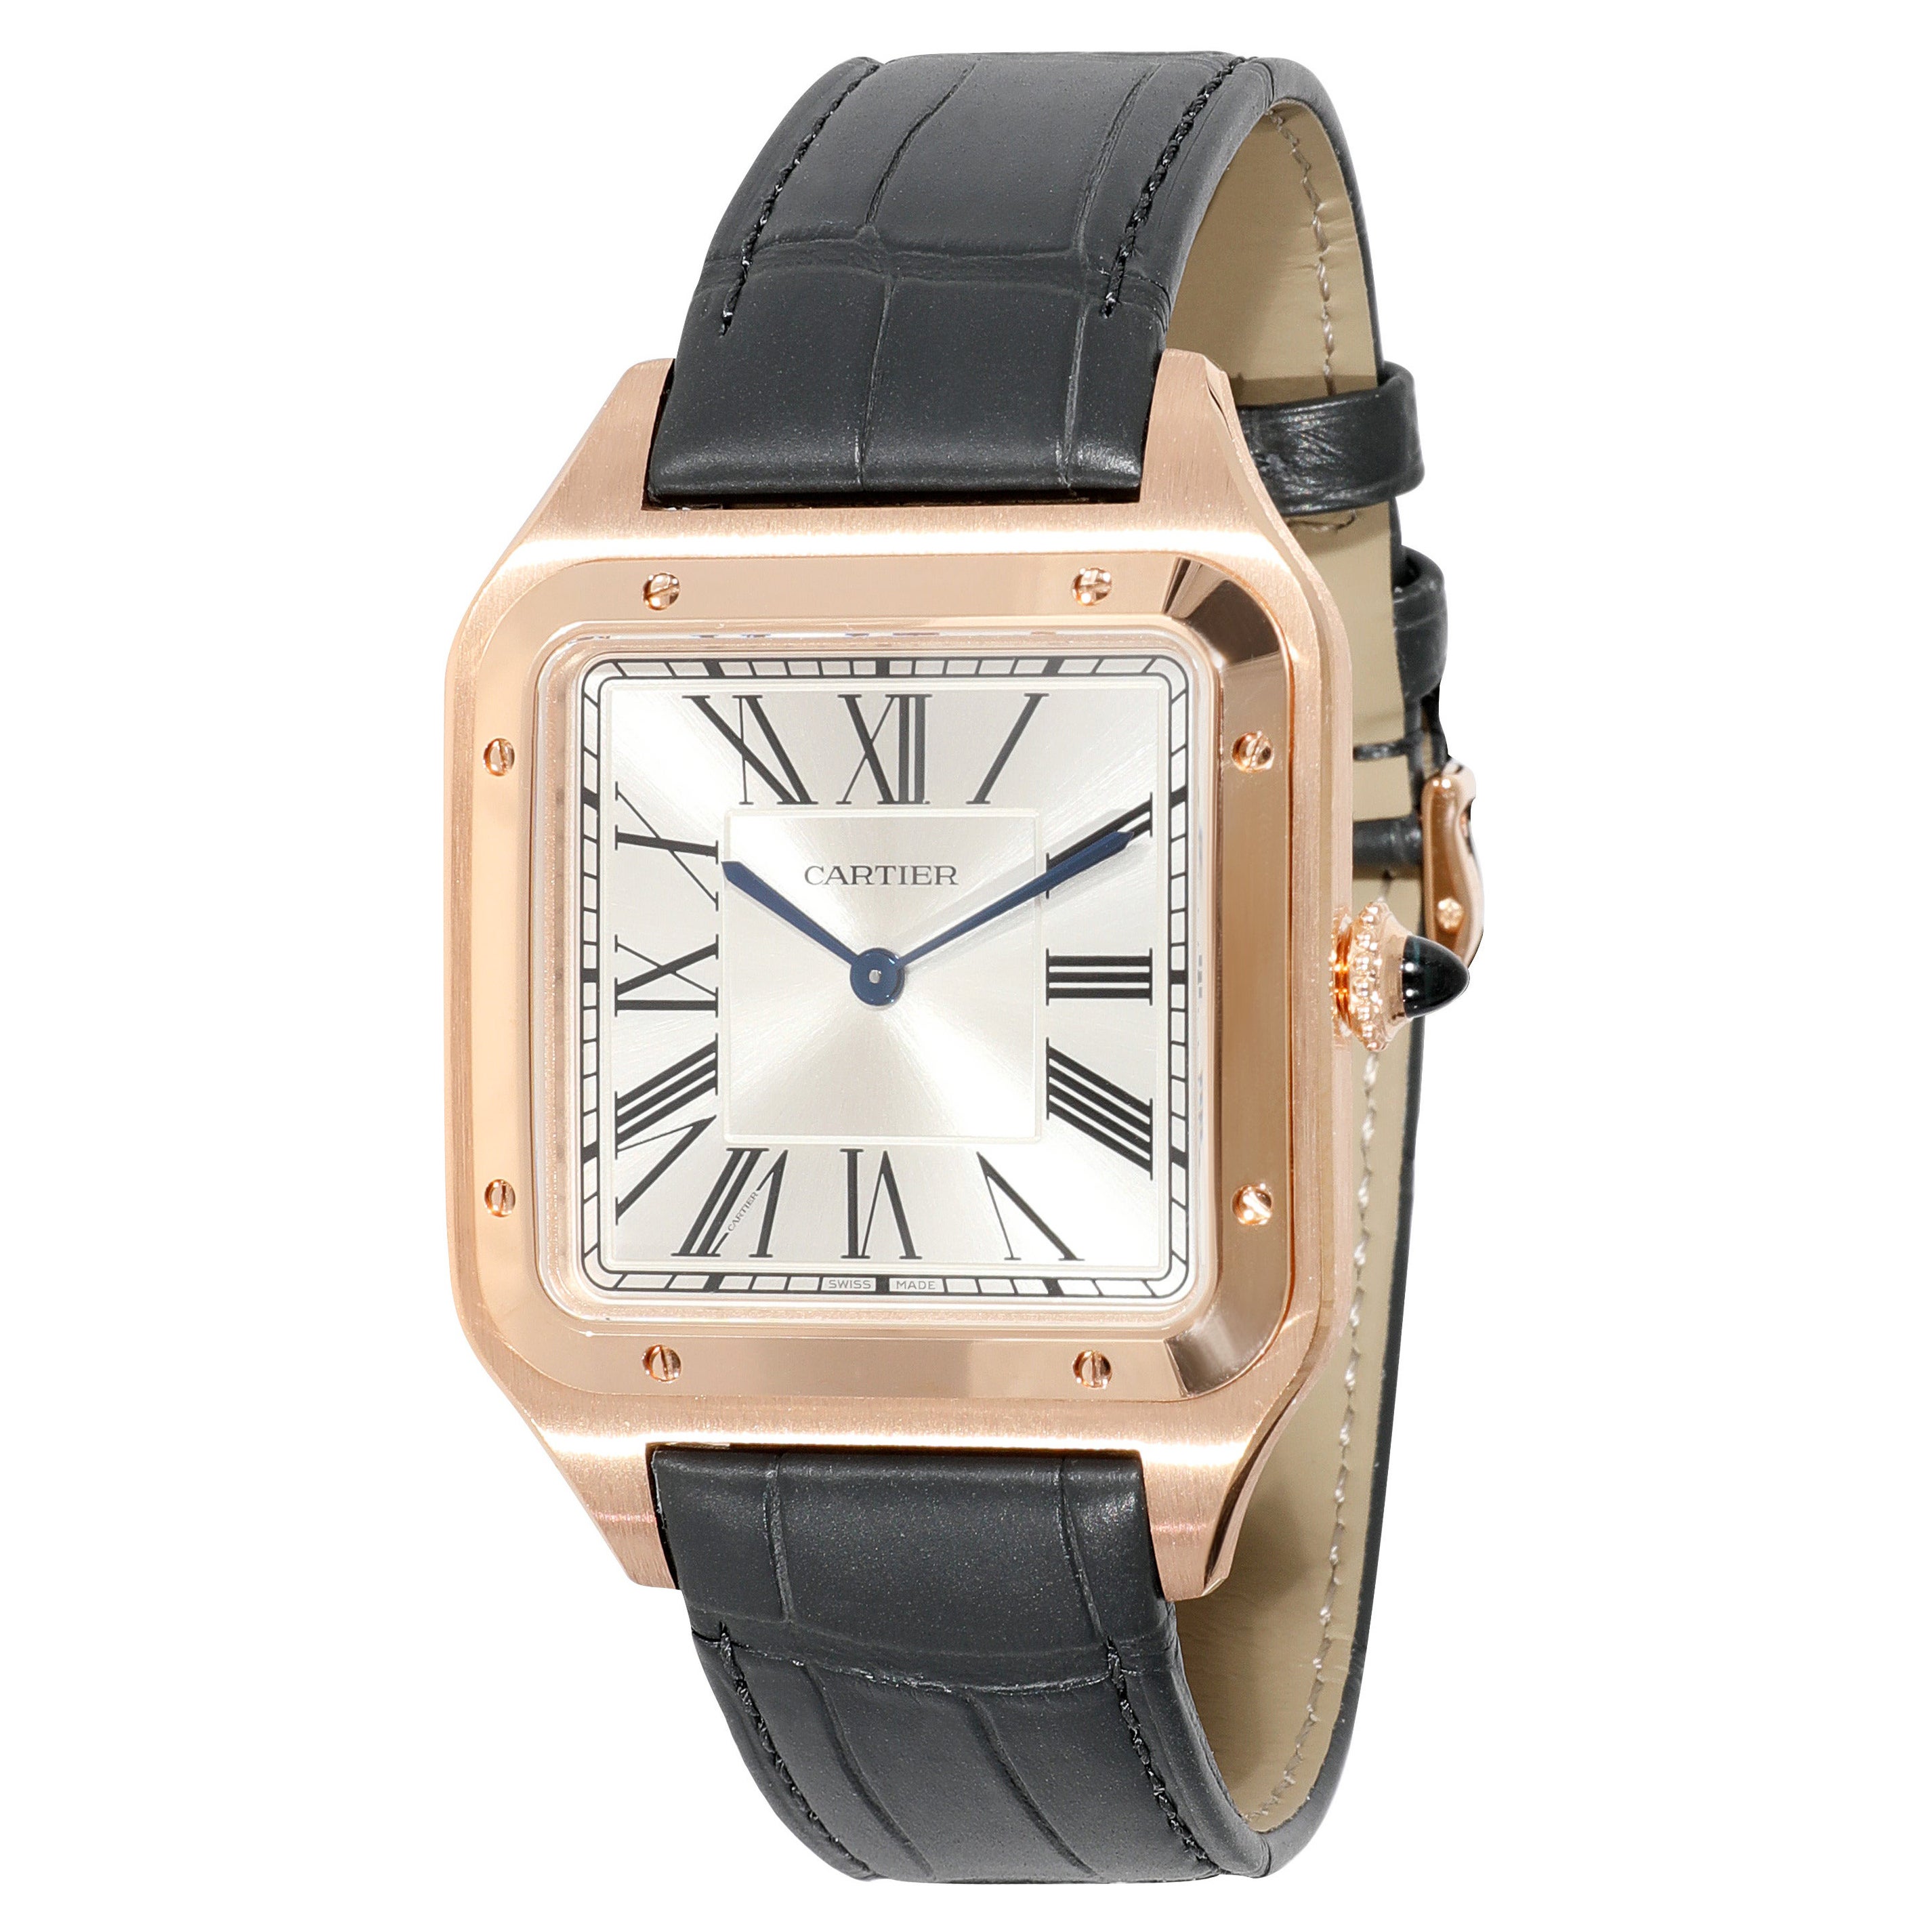 Cartier Santo-Dumont WGSA0032 Men's Watch in 18 Karat Rose Gold